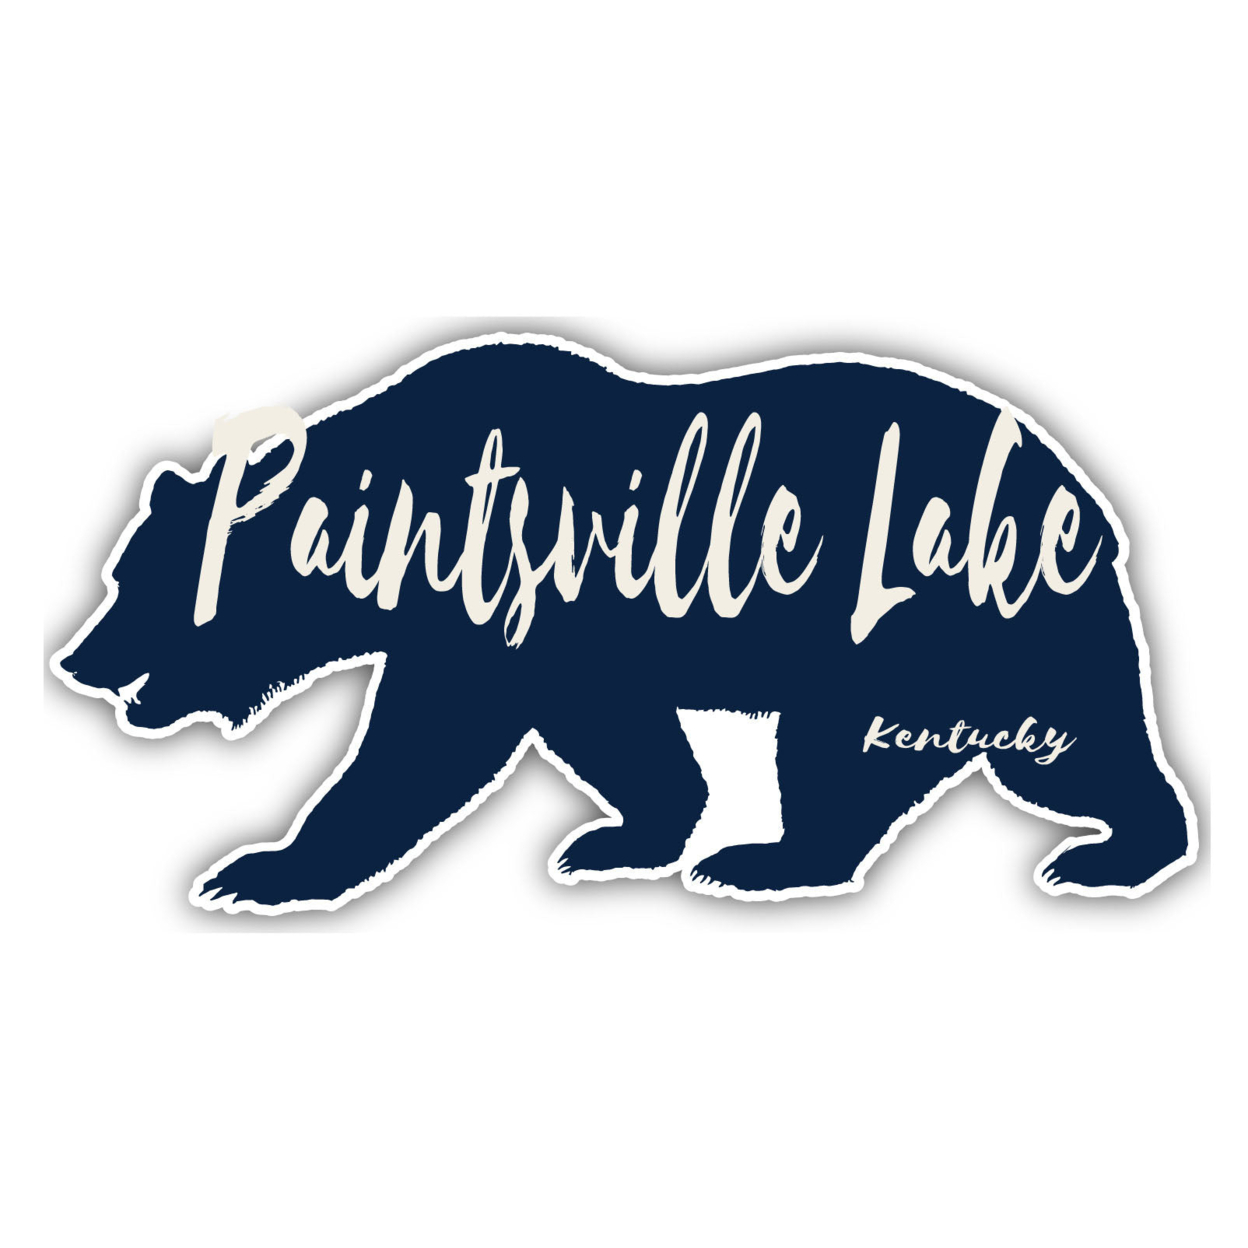 Paintsville Lake Kentucky Souvenir Decorative Stickers (Choose Theme And Size) - Single Unit, 4-Inch, Bear